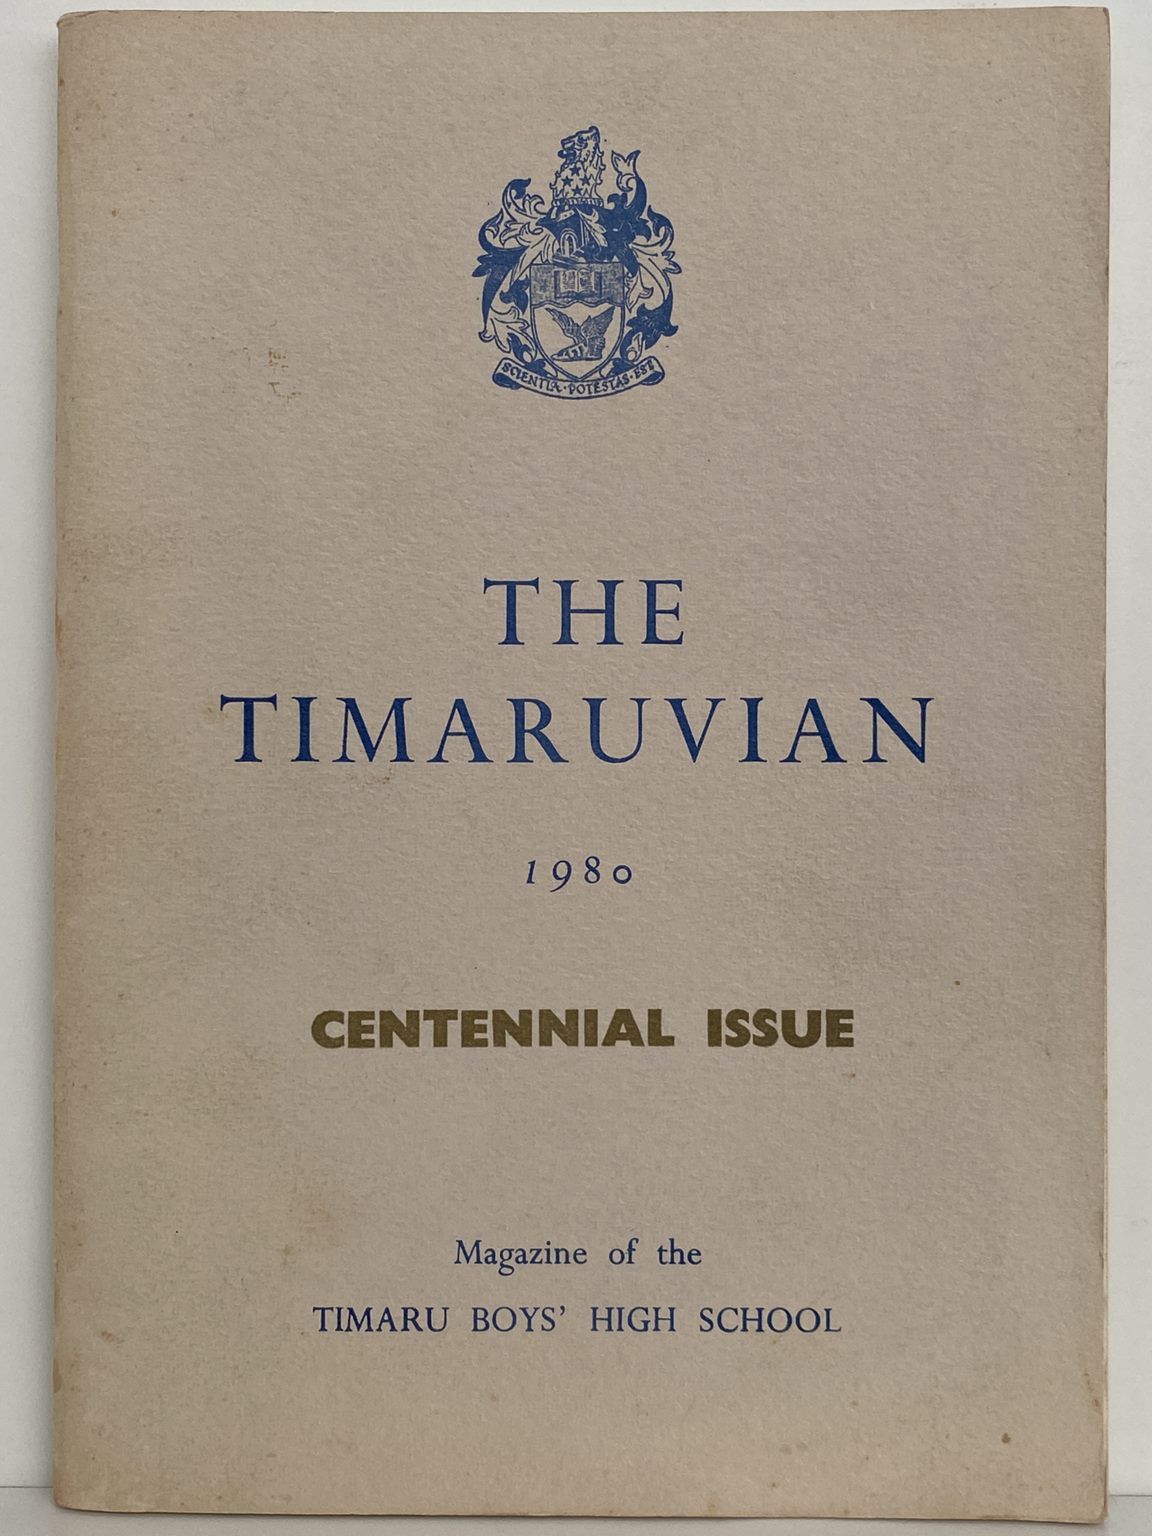 THE TIMARUVIAN: Magazine of the Timaru Boys' High School - Centennial Issue 1980